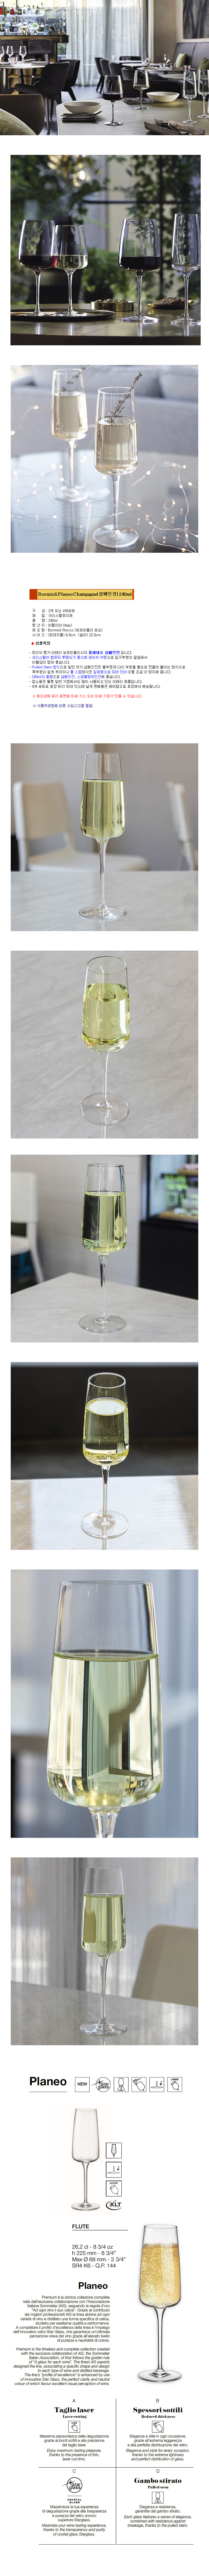 Bormioli Planeo Champagne(샴페인잔) 240ml (2P 4P) 18,500원 - 더리빙샵 생활/주방, 컵/텀블러, 술잔, 샴페인/칵테일잔 바보사랑 Bormioli Planeo Champagne(샴페인잔) 240ml (2P 4P) 18,500원 - 더리빙샵 생활/주방, 컵/텀블러, 술잔, 샴페인/칵테일잔 바보사랑